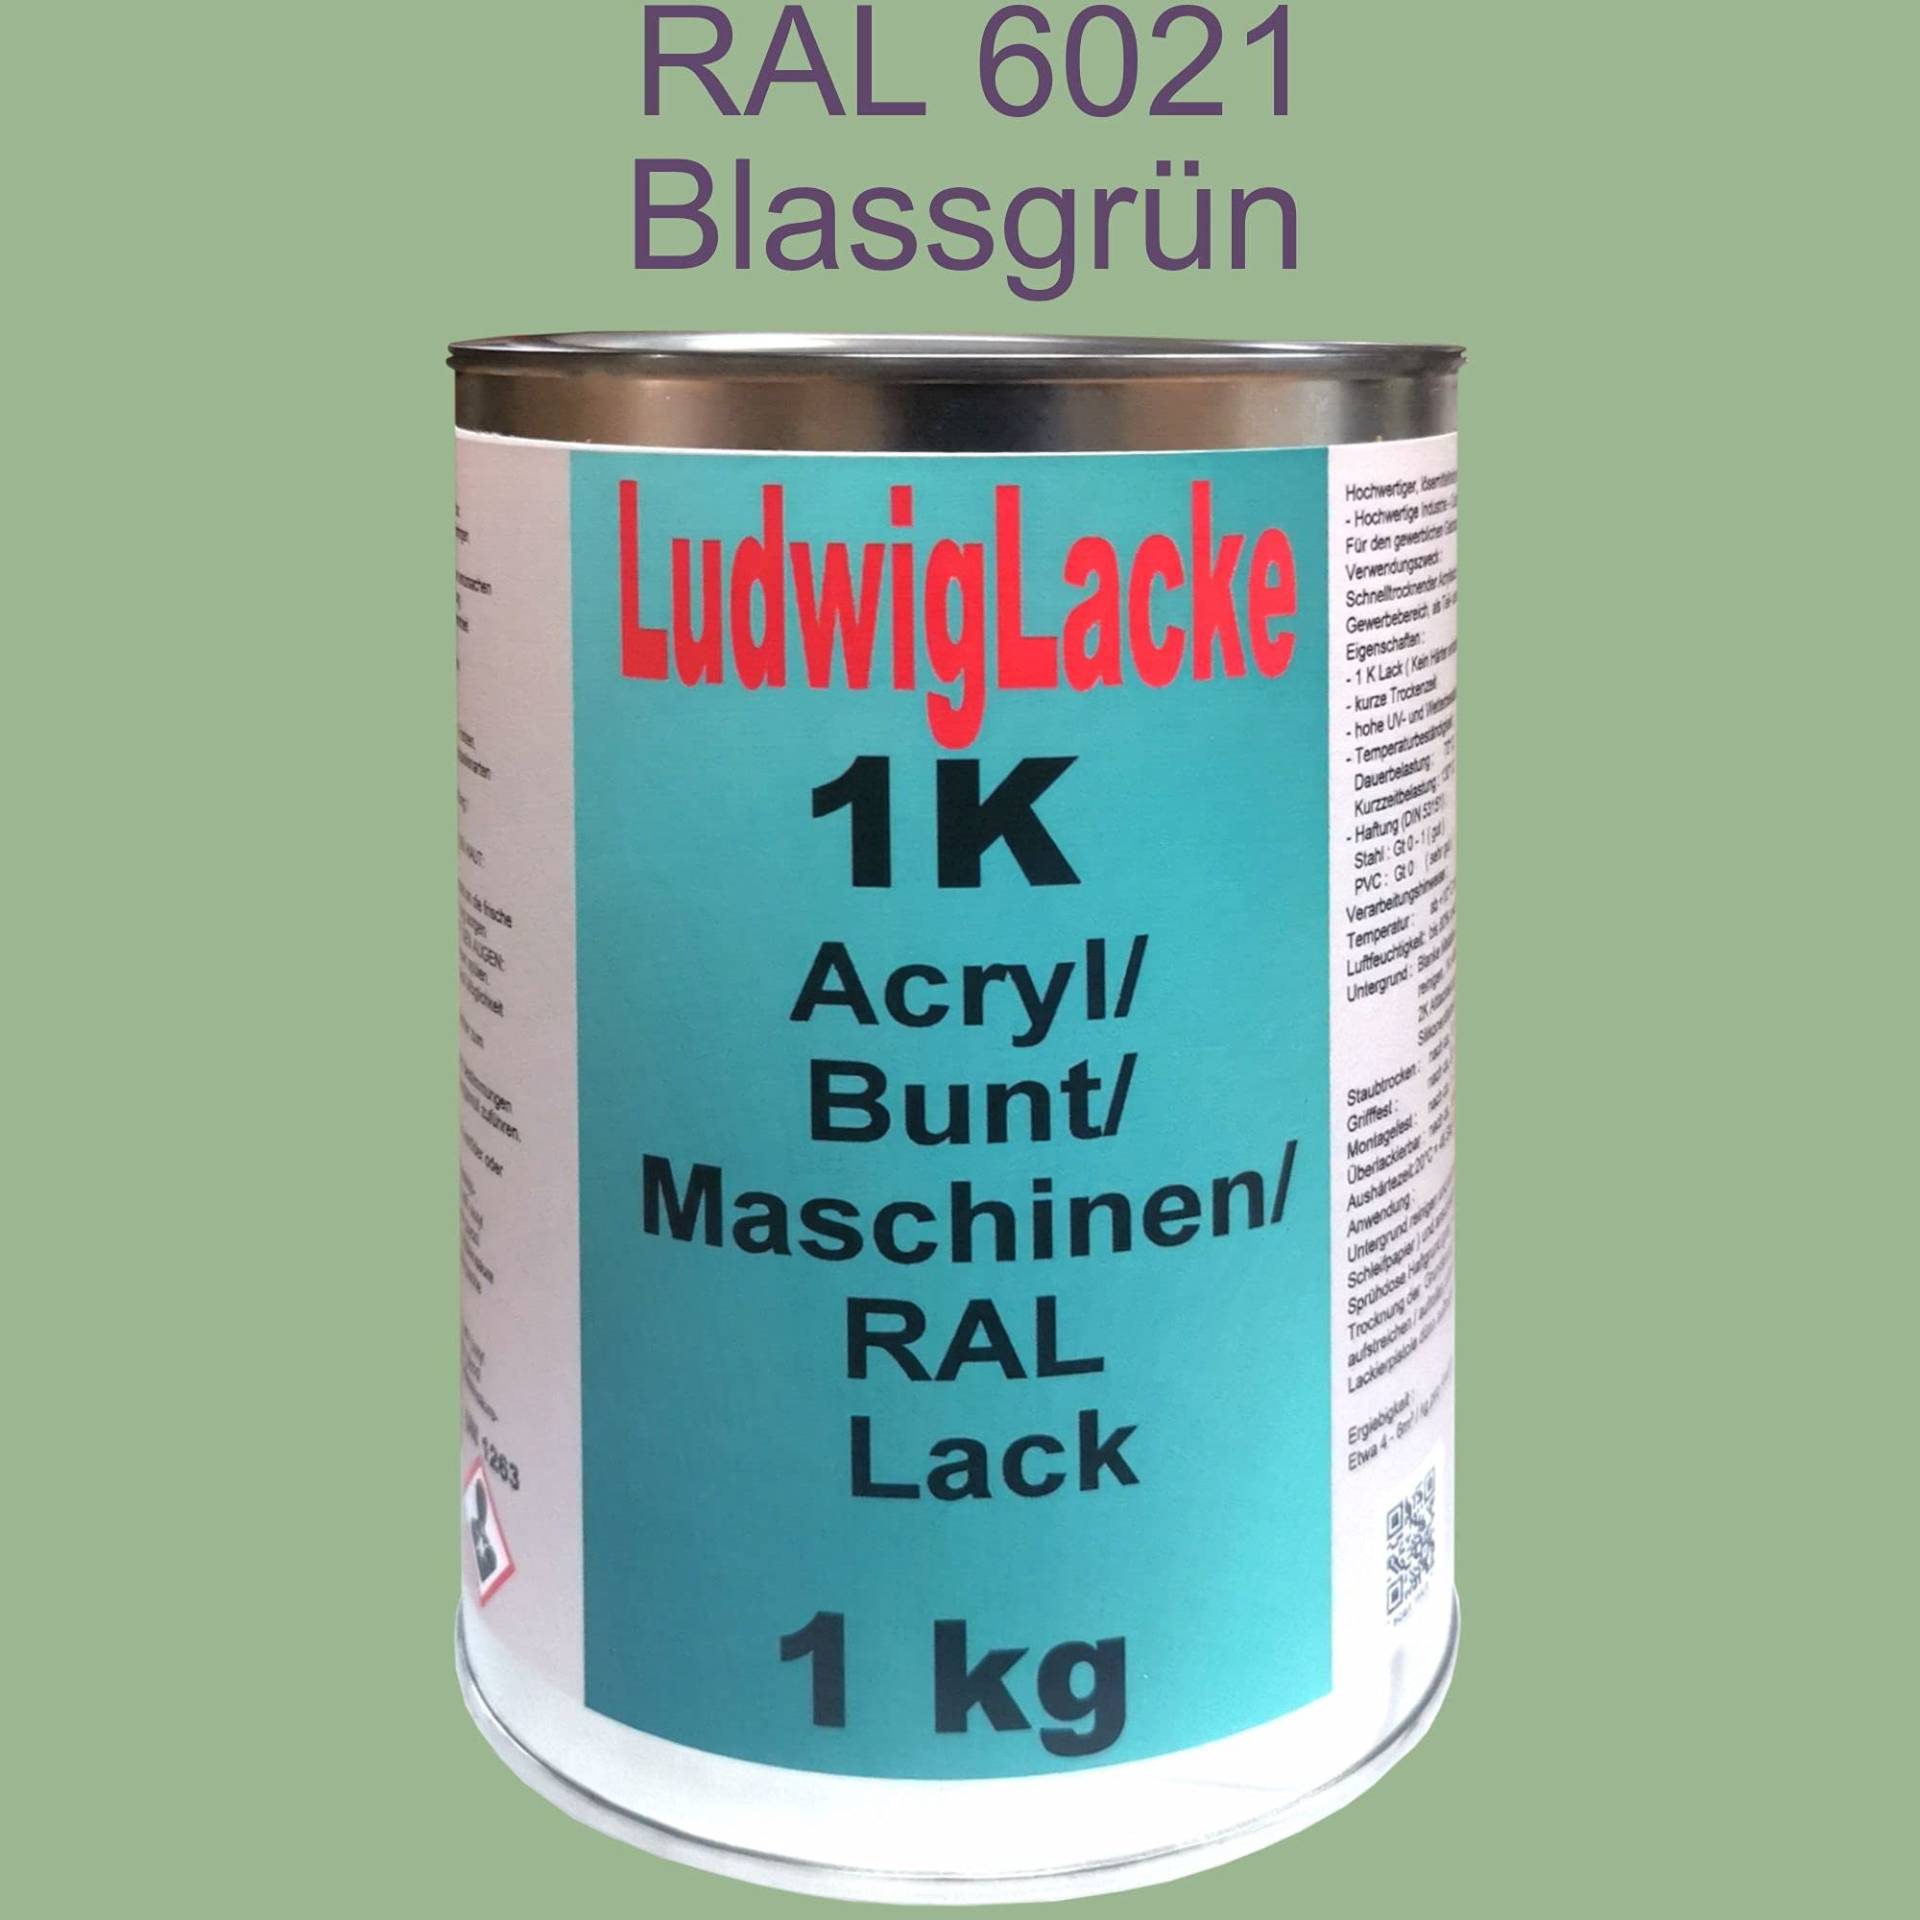 1K Maschinenlack 1kg RAL 6021 Blassgrün Lack glänzend Ludwiglacke von Ludwiglacke